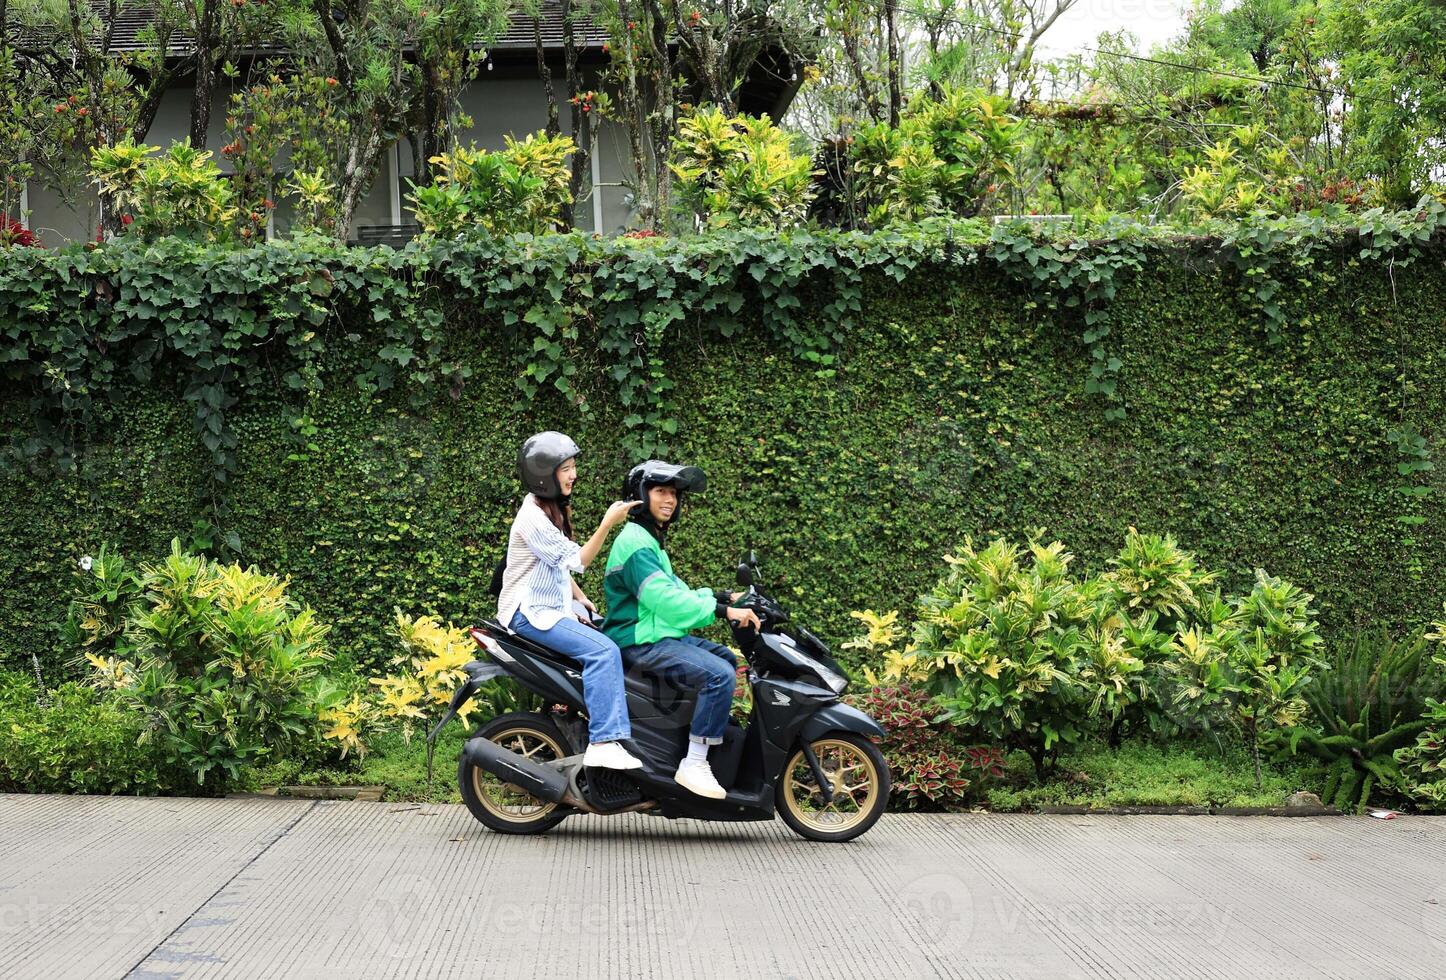 en línea motocicleta Taxi conductores con hembra pasajeros foto